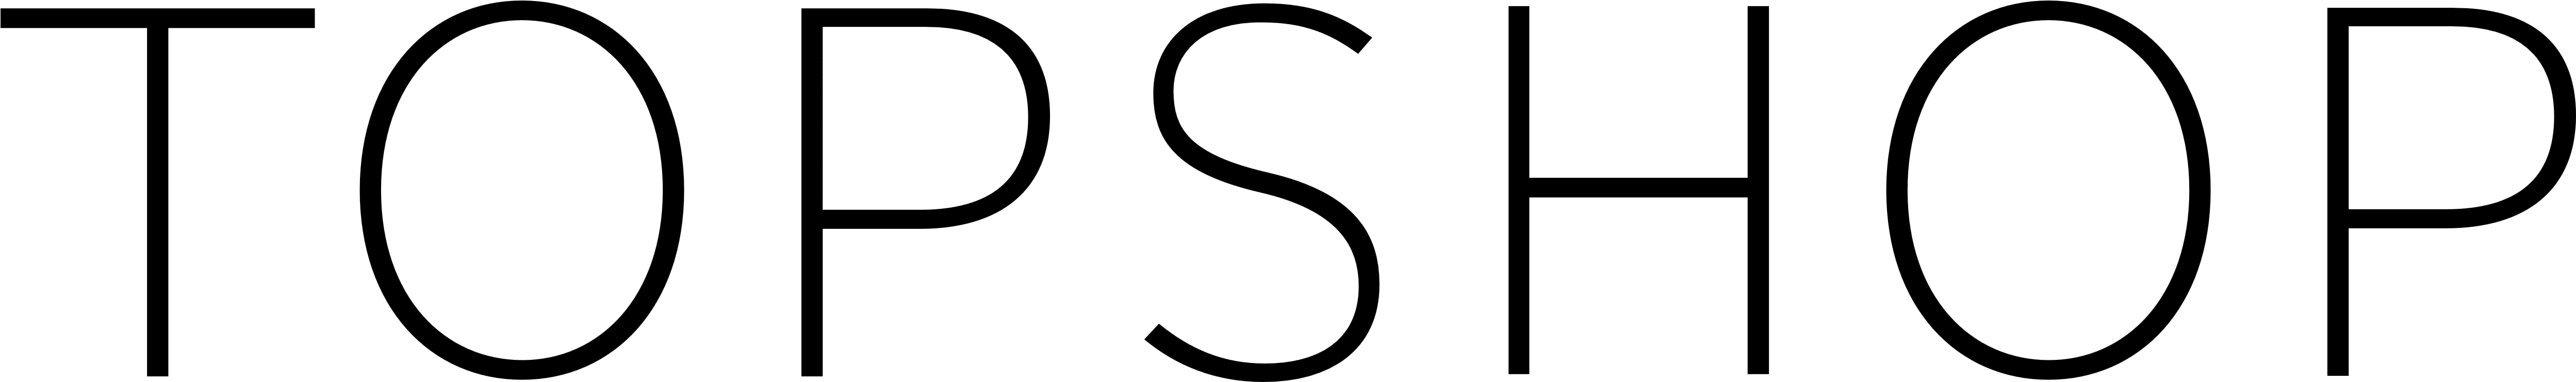 Topshop Coupon - Topshop Logo White Png (5100x820)